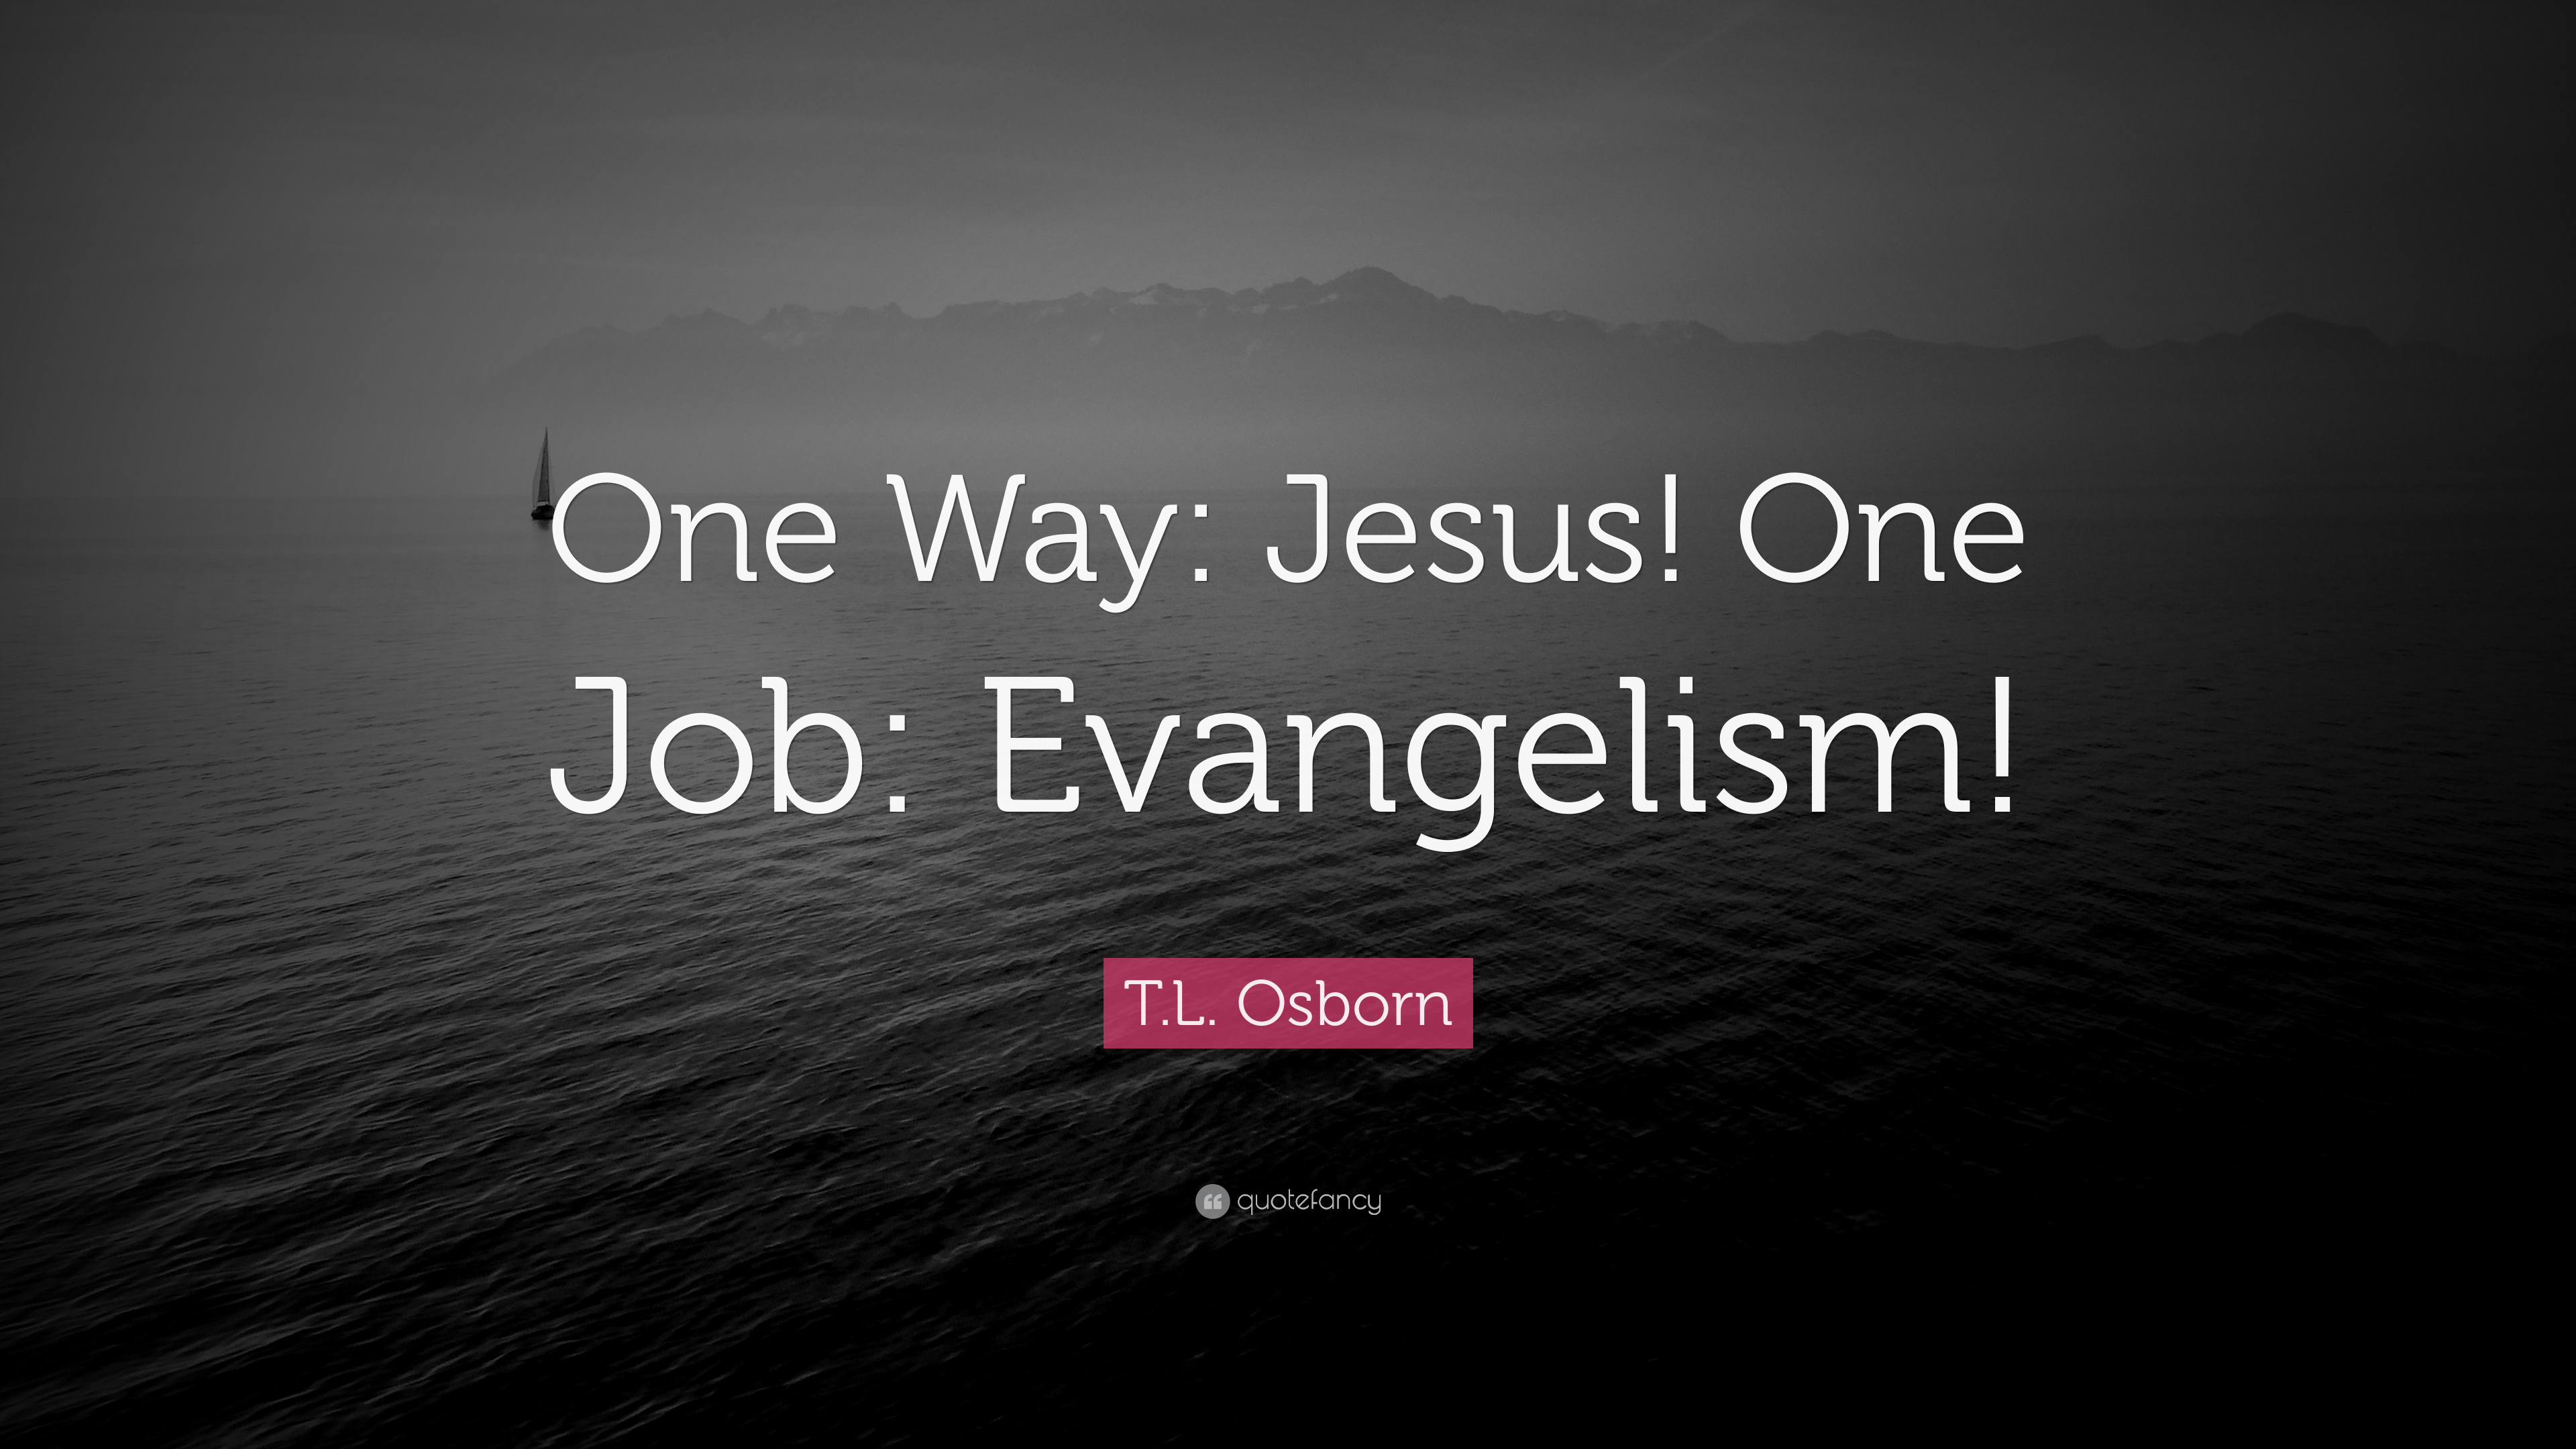 T.L. Osborn Quote: “One Way: Jesus! One Job: Evangelism!”